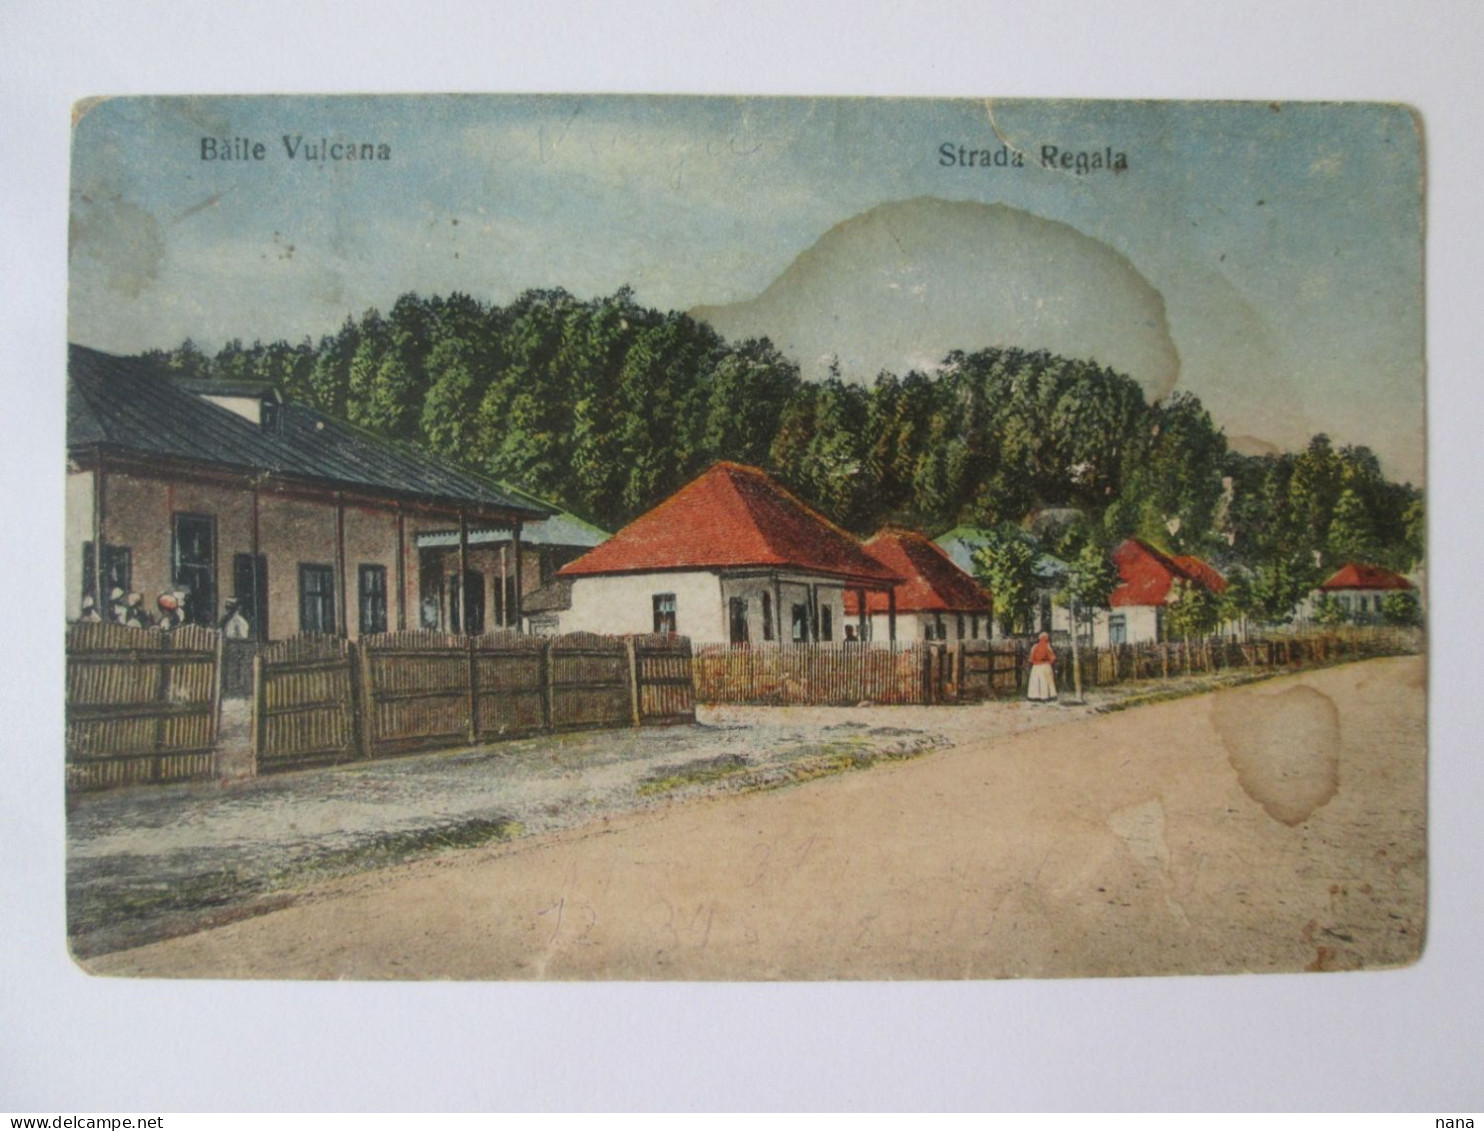 Romania-Băile Vulcana(Dâmbovița):Rue Royale Carte Postale Vers 1920/Royal Street Unused Postcard About 1920 - Romania